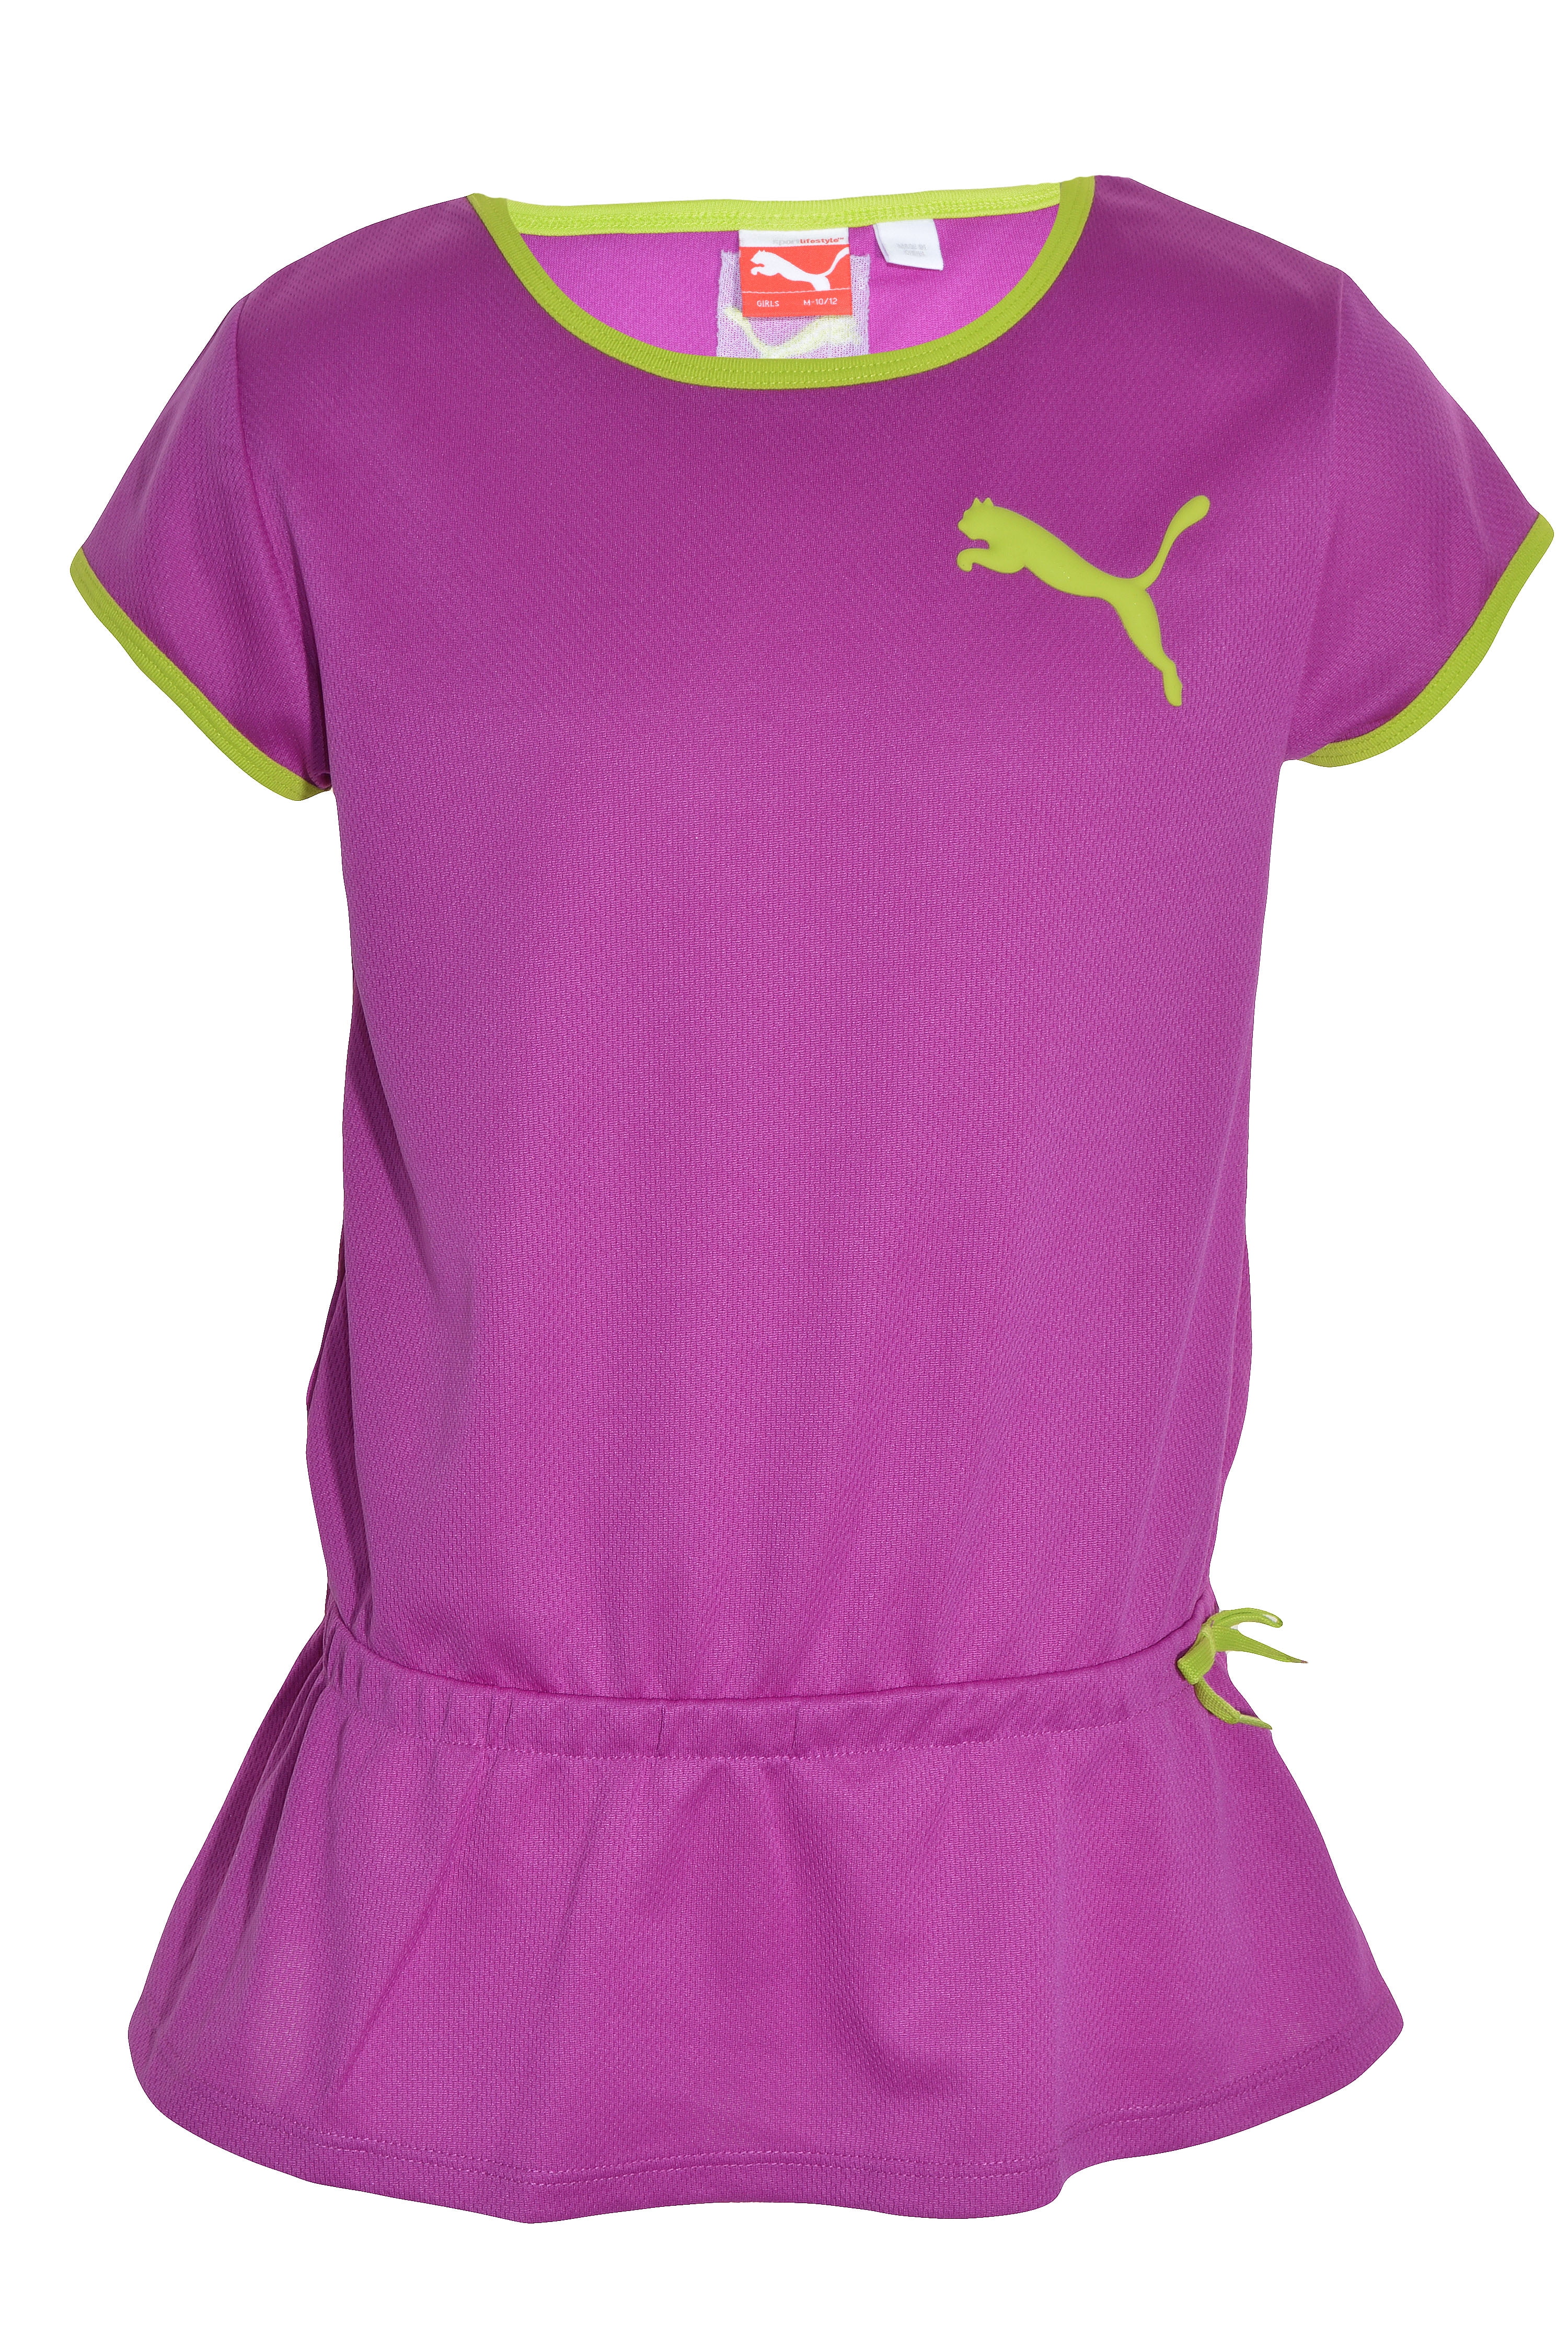 Puma Big 10/12) Athletic Girls M Peplum Shirt (Purple